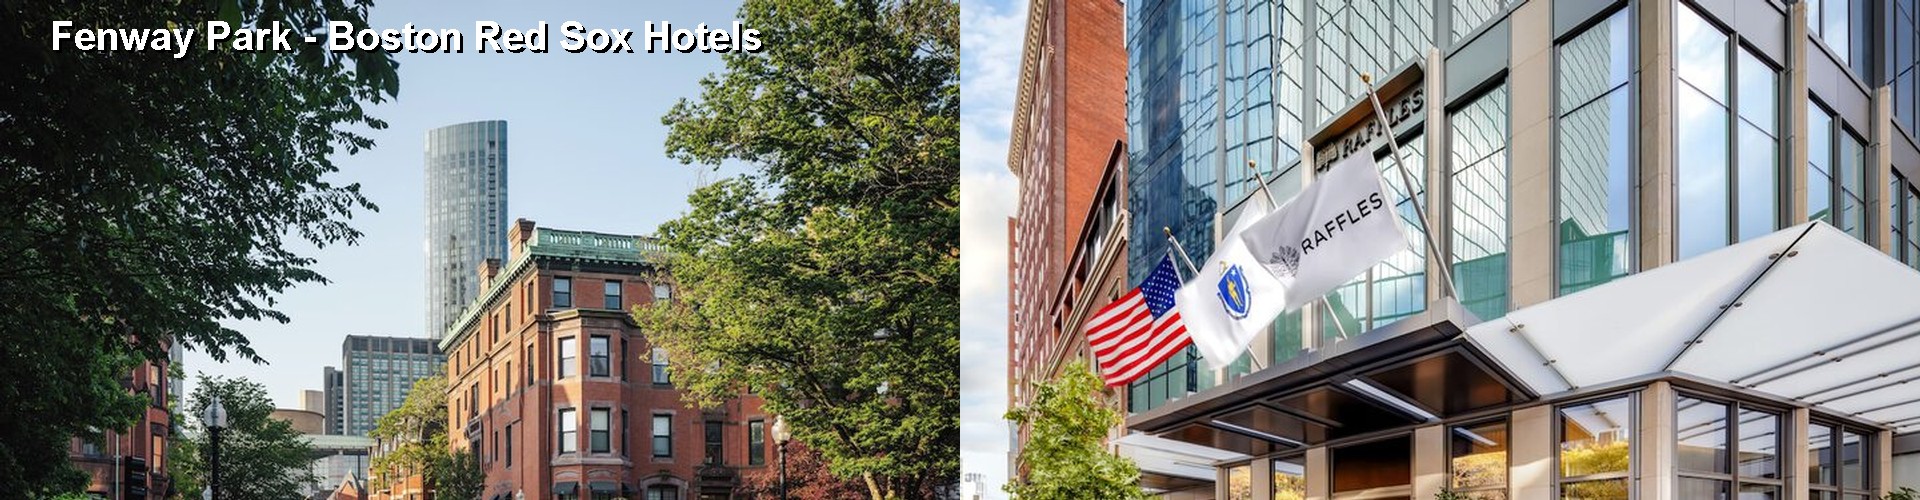 5 Best Hotels near Fenway Park - Boston Red Sox